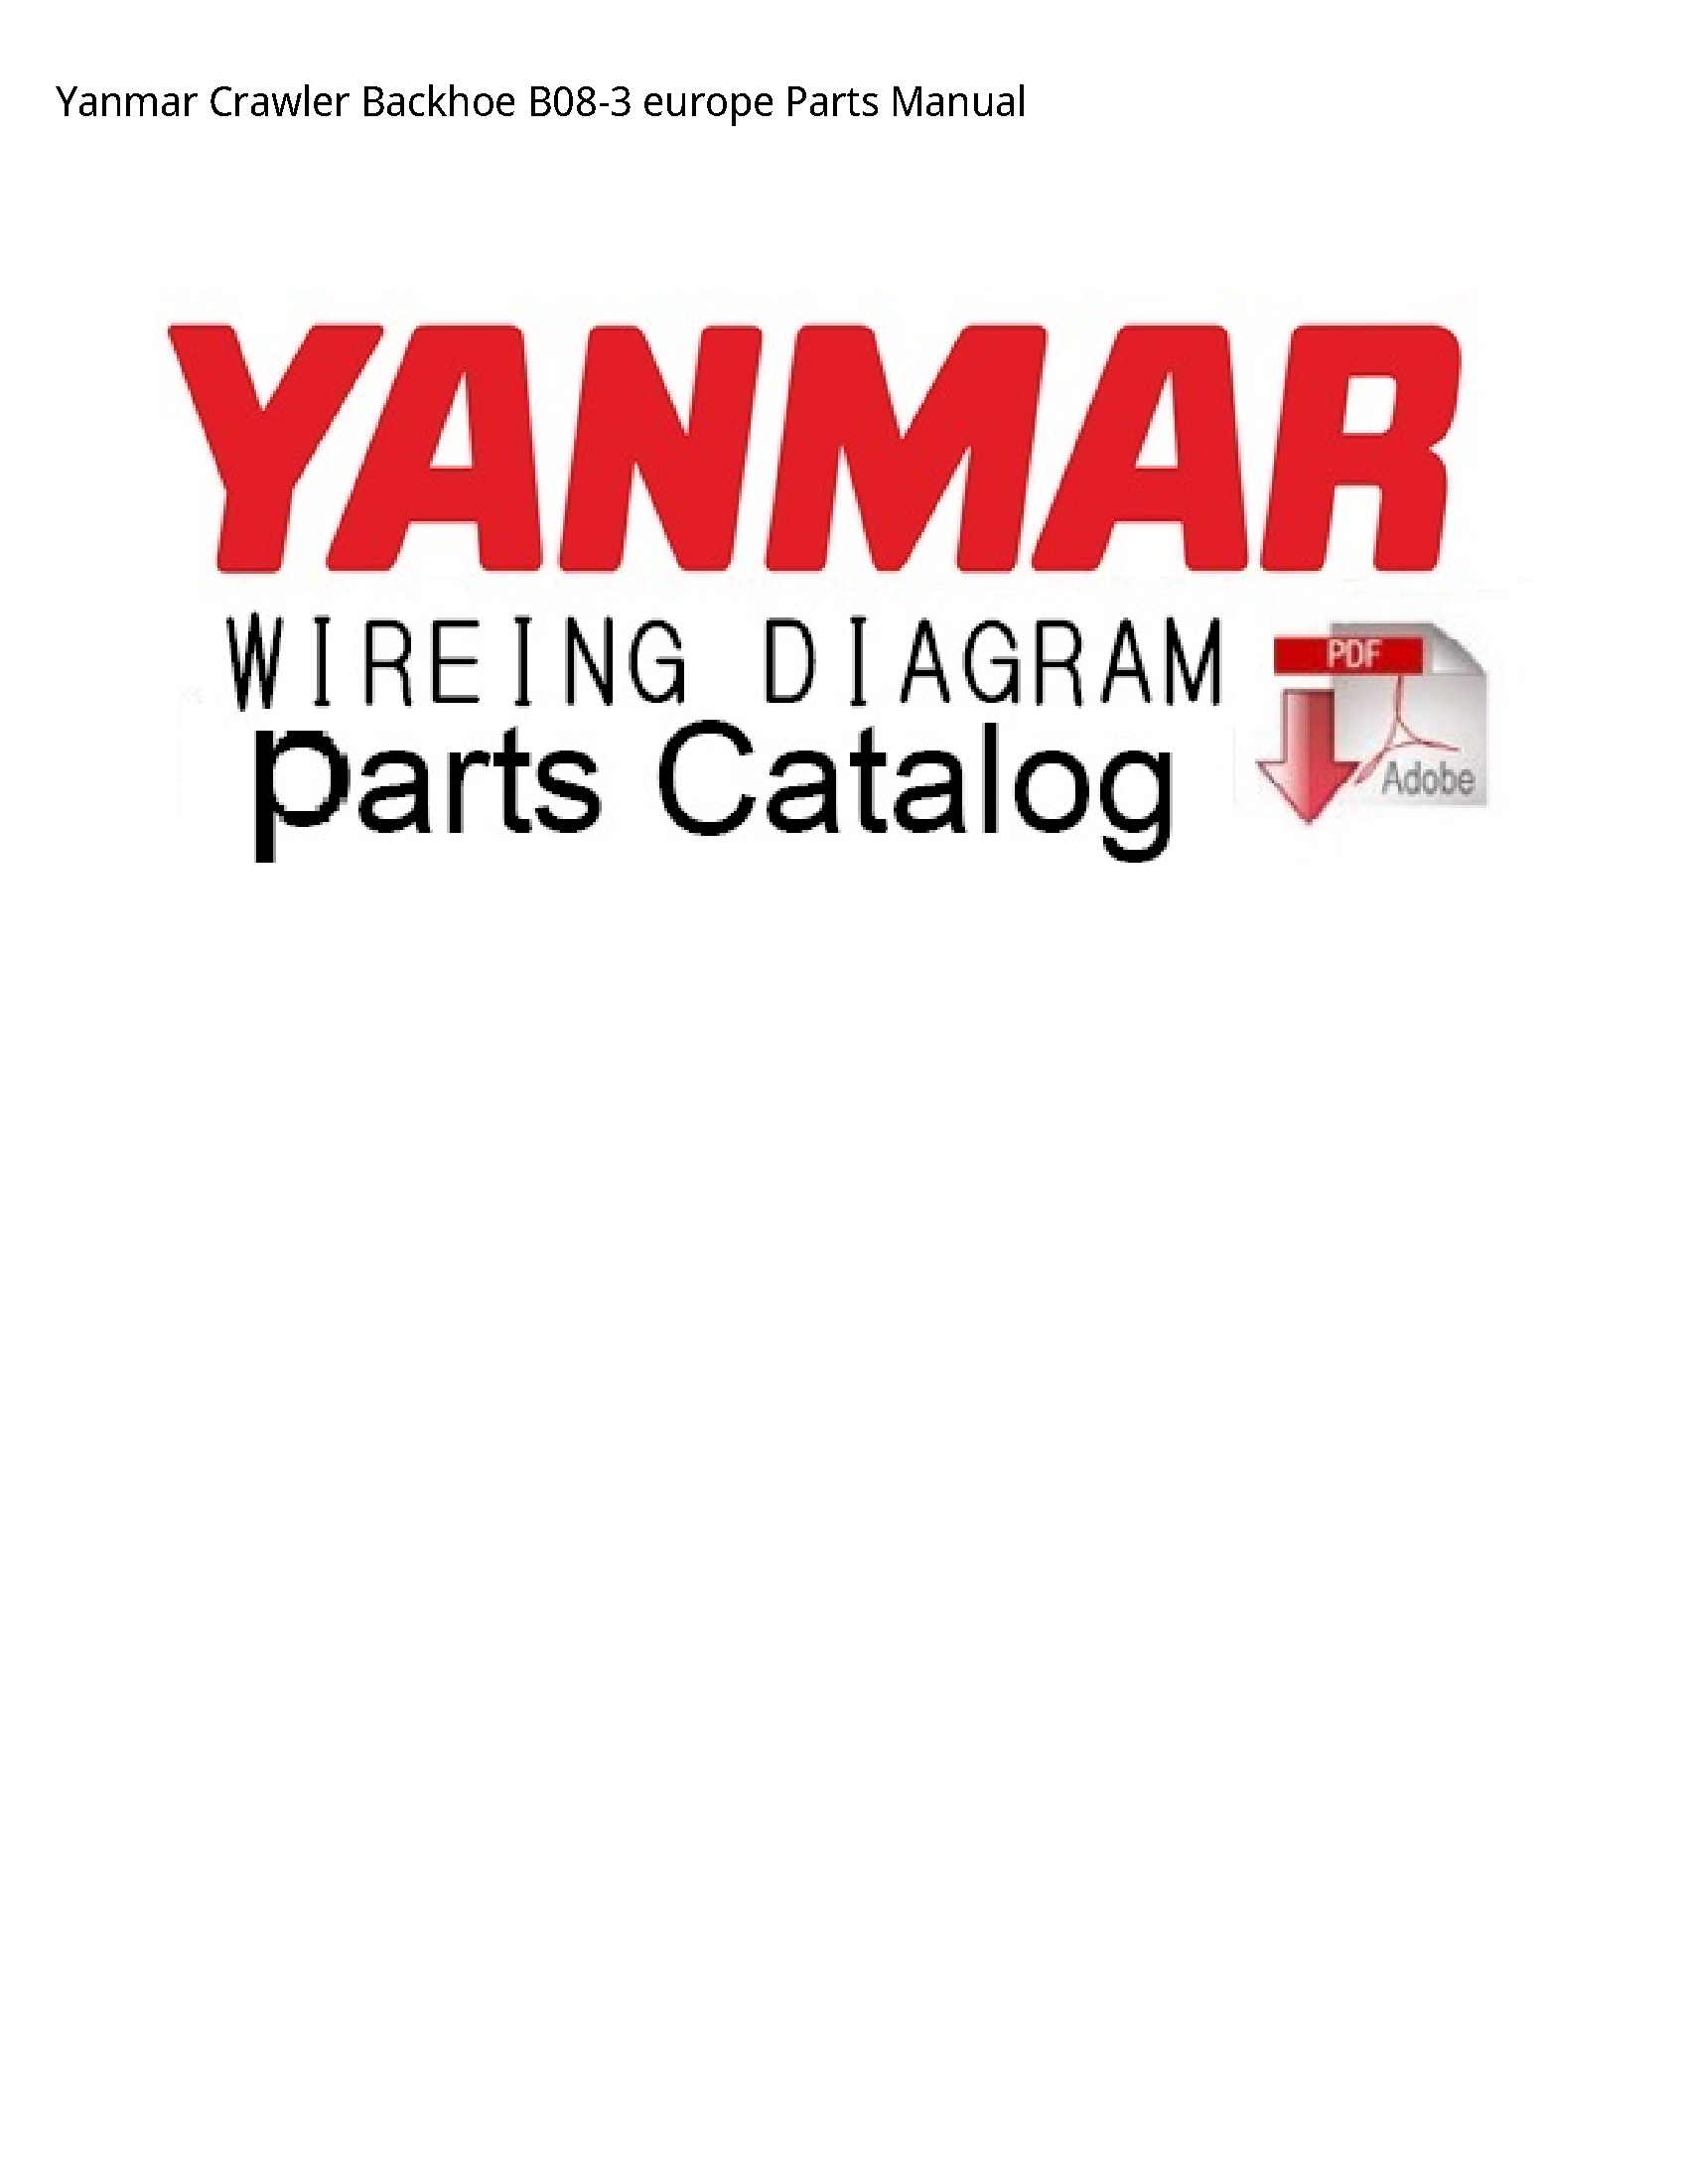 Yanmar B08-3 Crawler Backhoe europe Parts manual